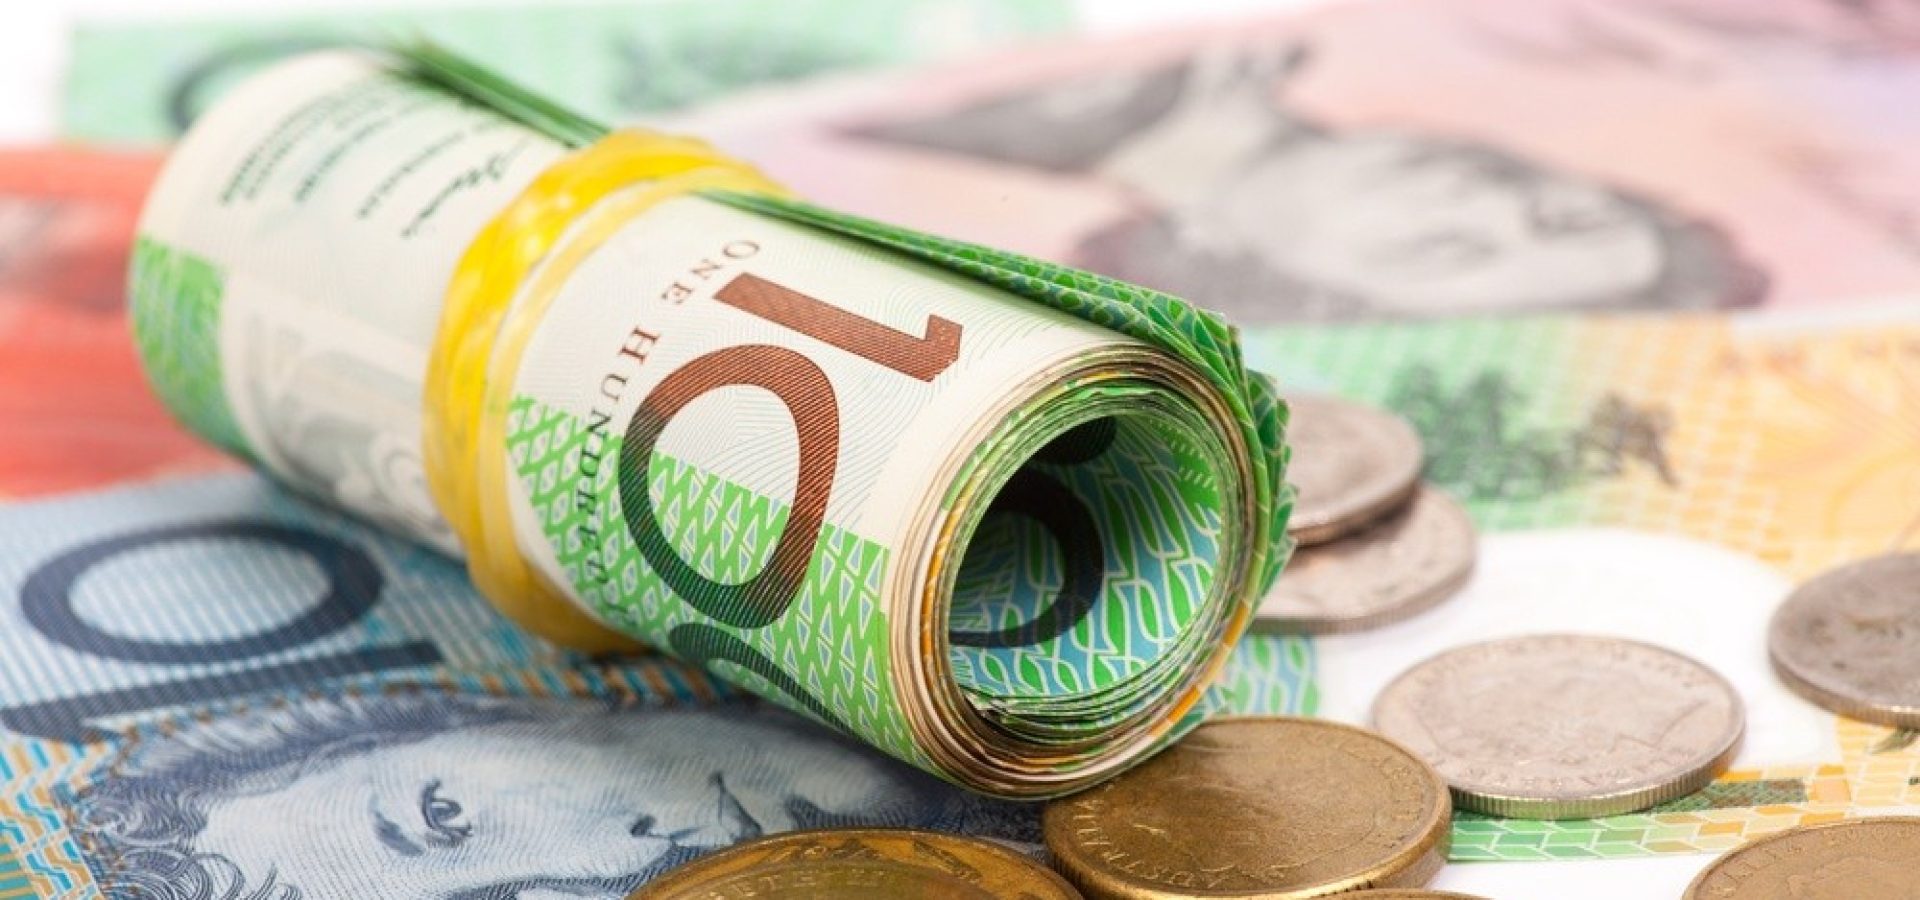 Wibest – the AUD: Australian dollar coins and bills.